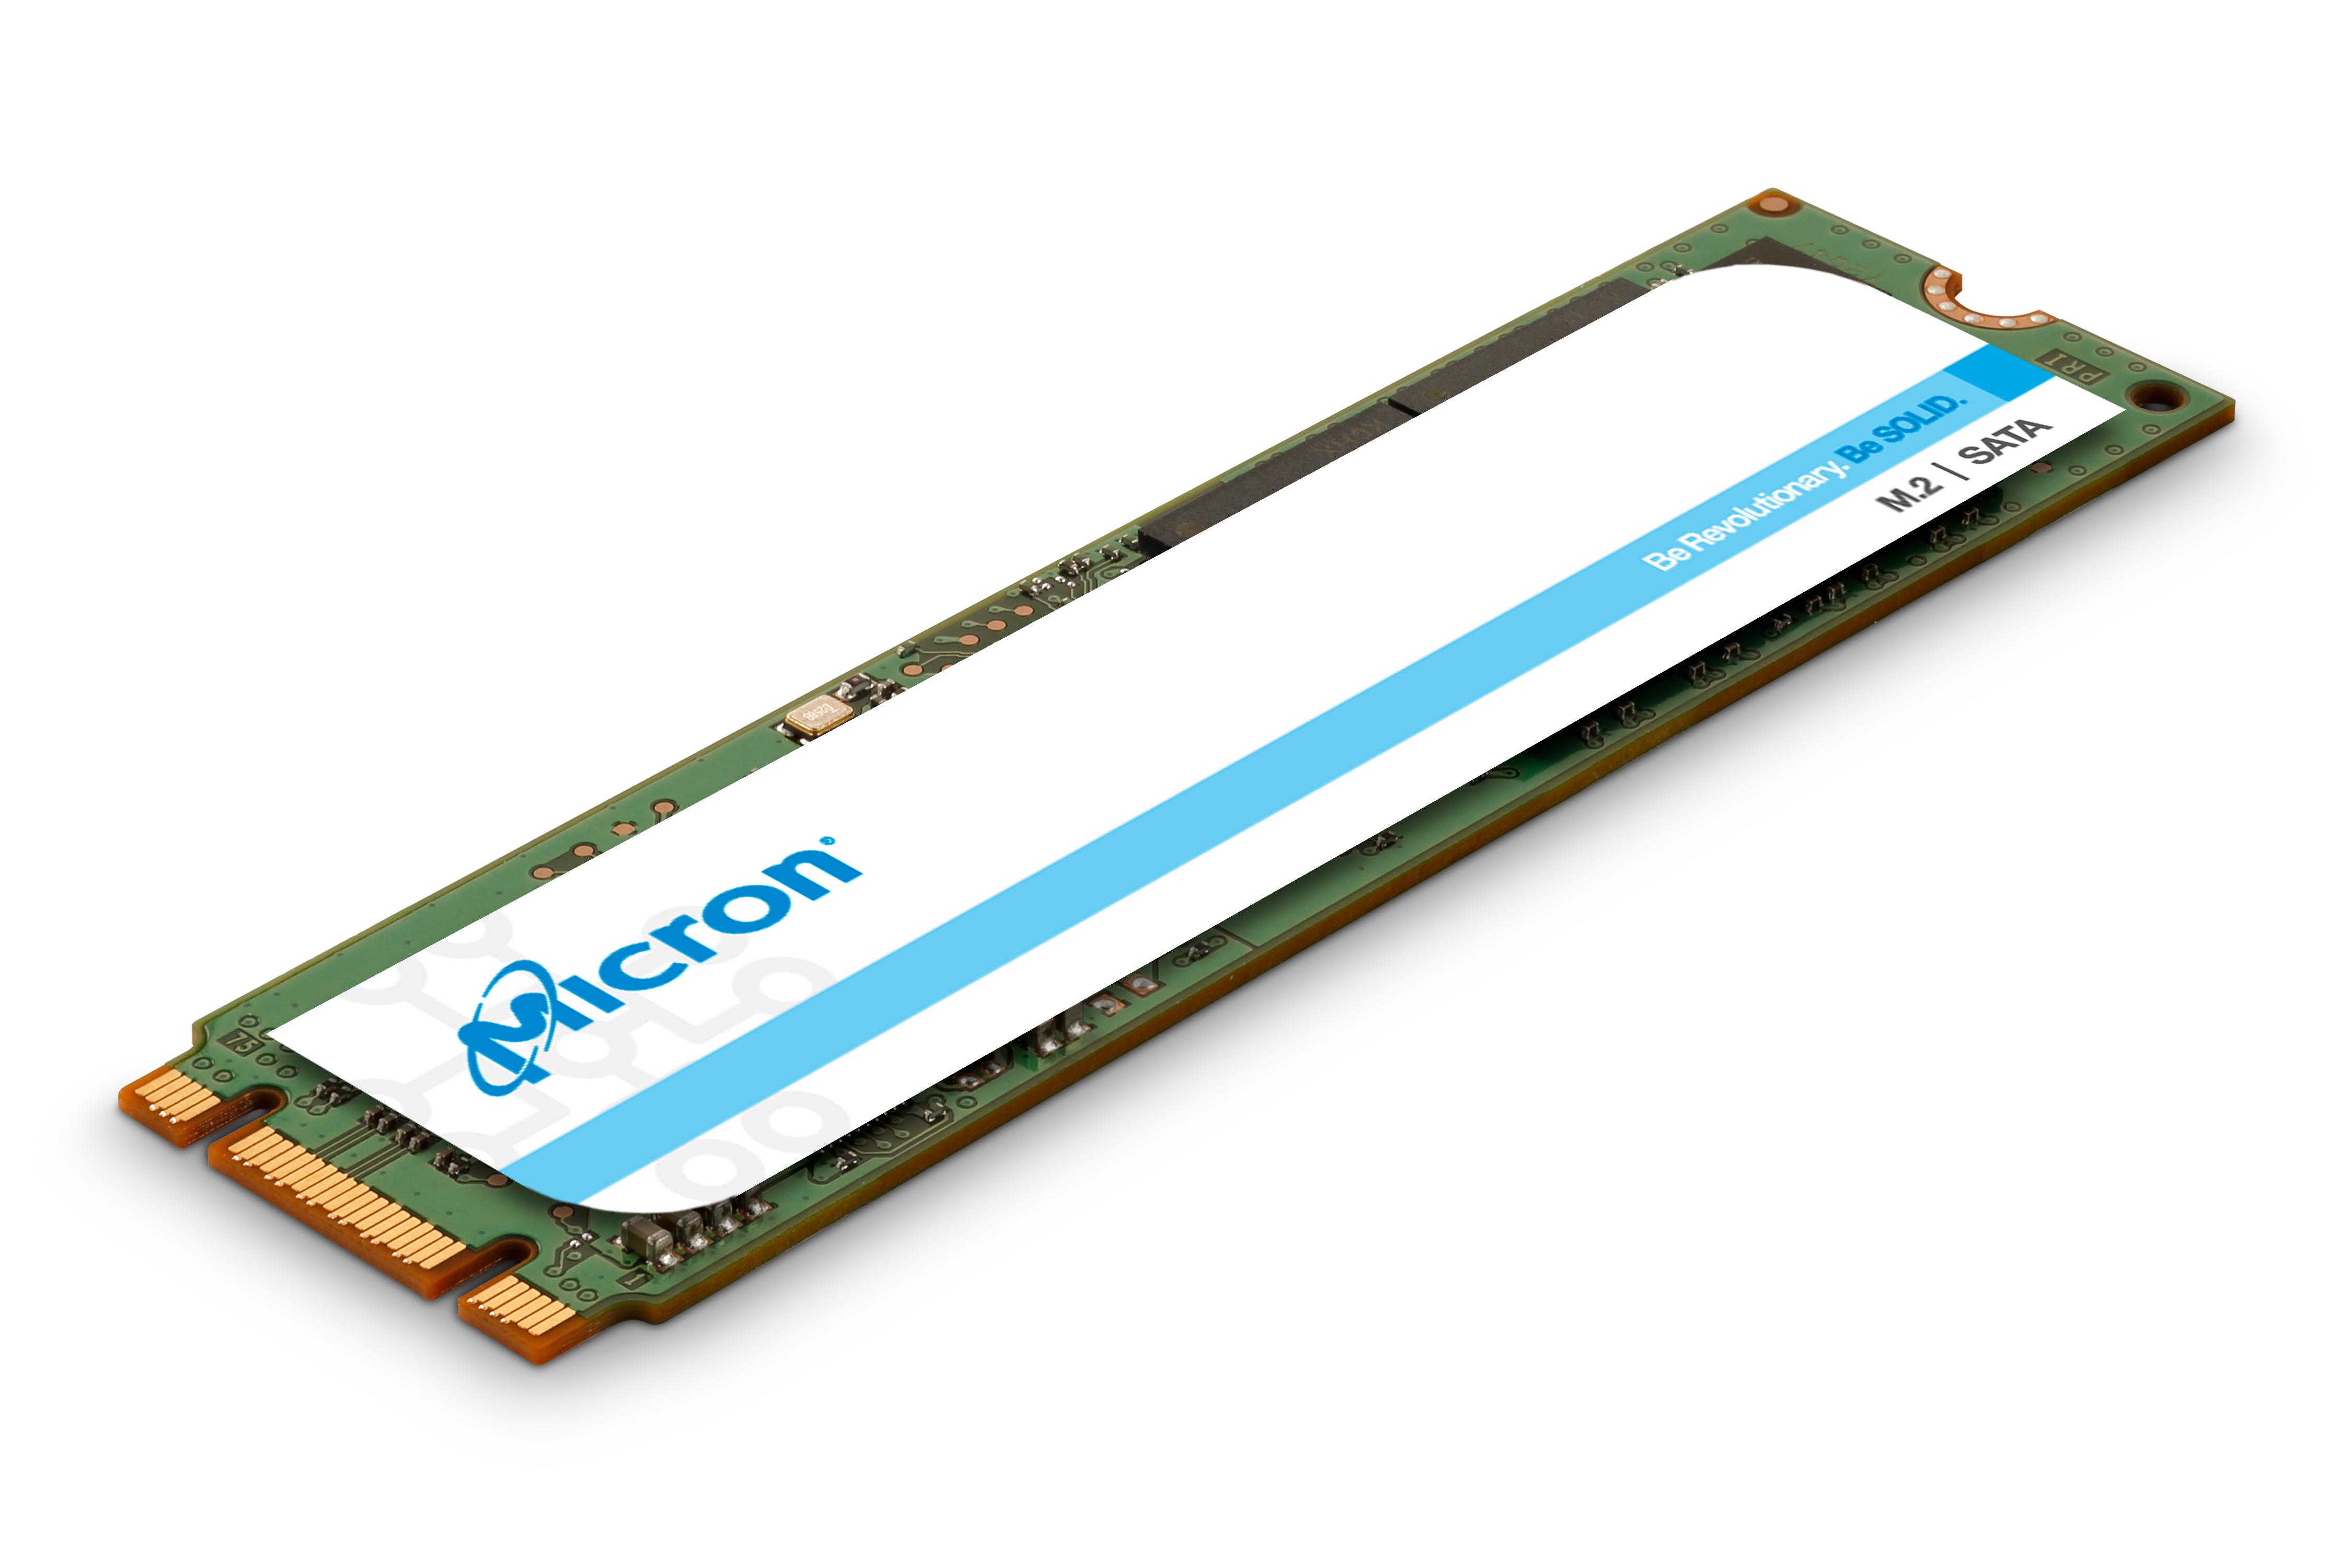 新品 Micron 1300 M.2 256GB MTFDDAV256TDL-1AW1ZABYY